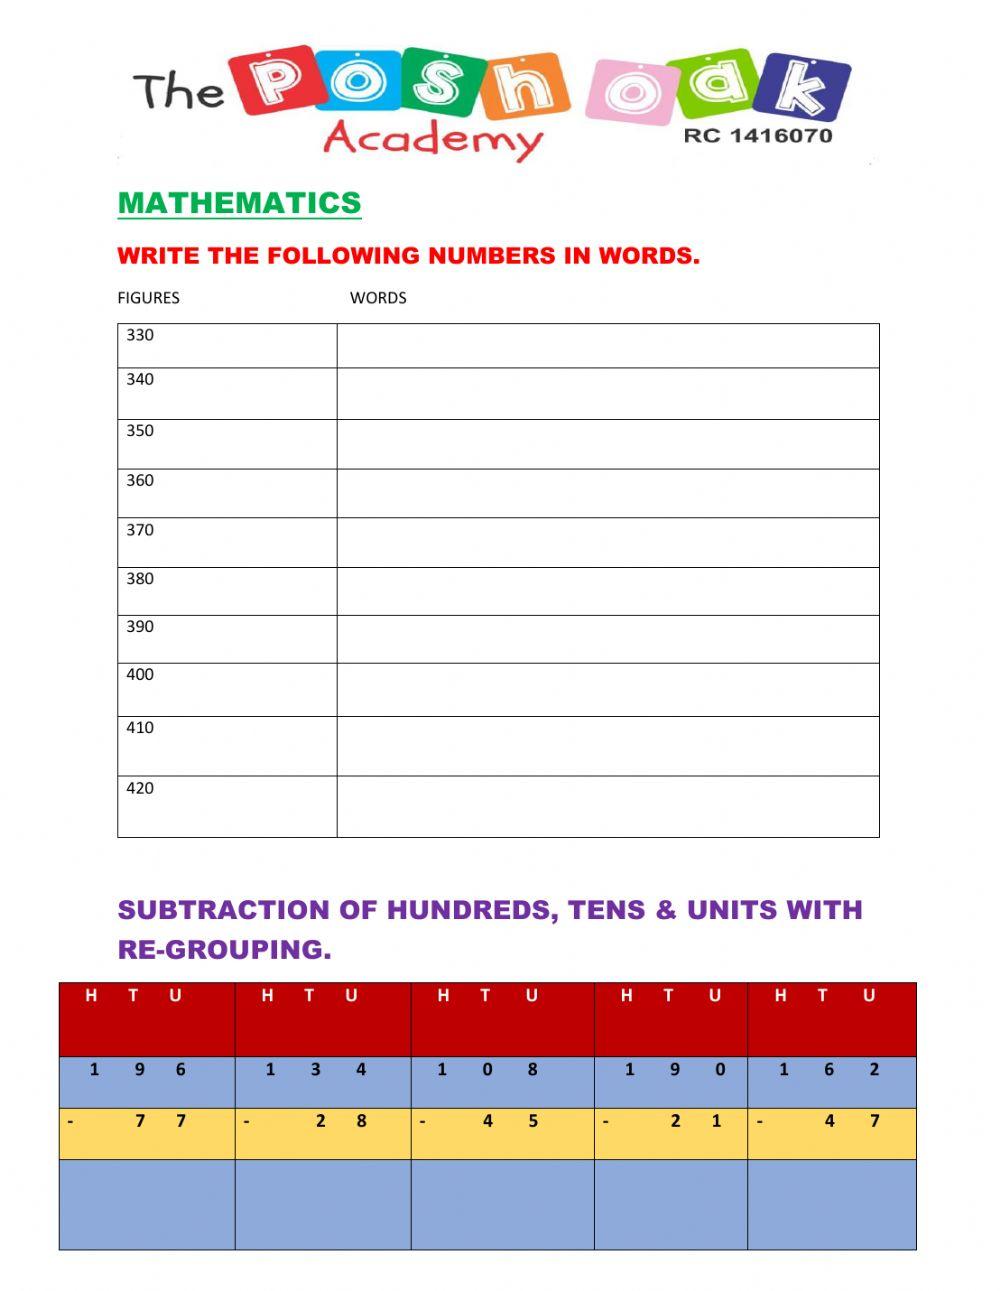 Numbers in words & Subtraction